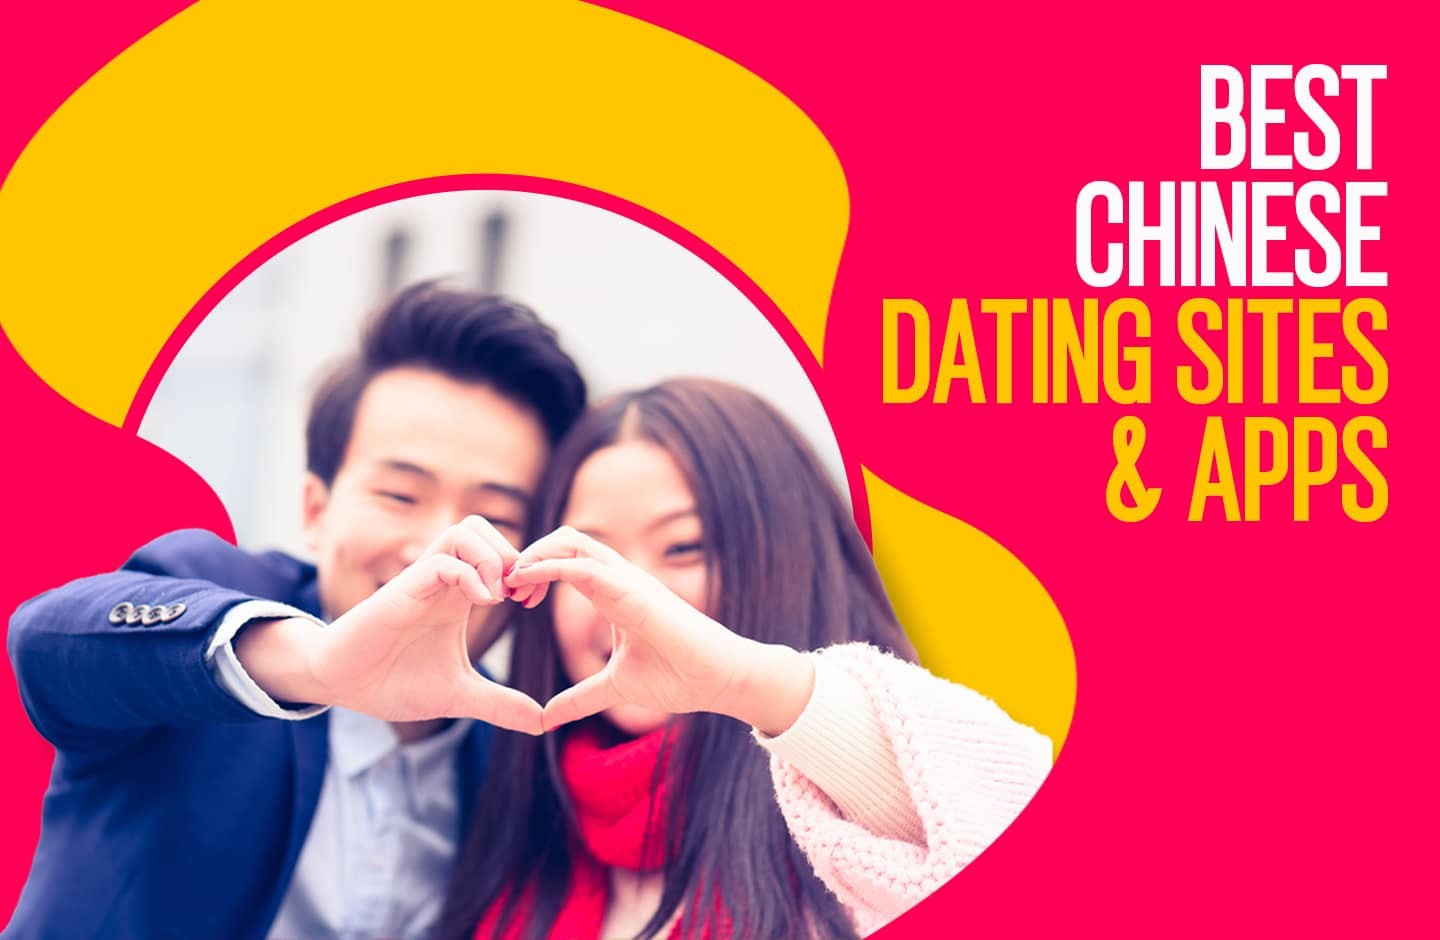 In Chengdu free sites dating online Chengdu online